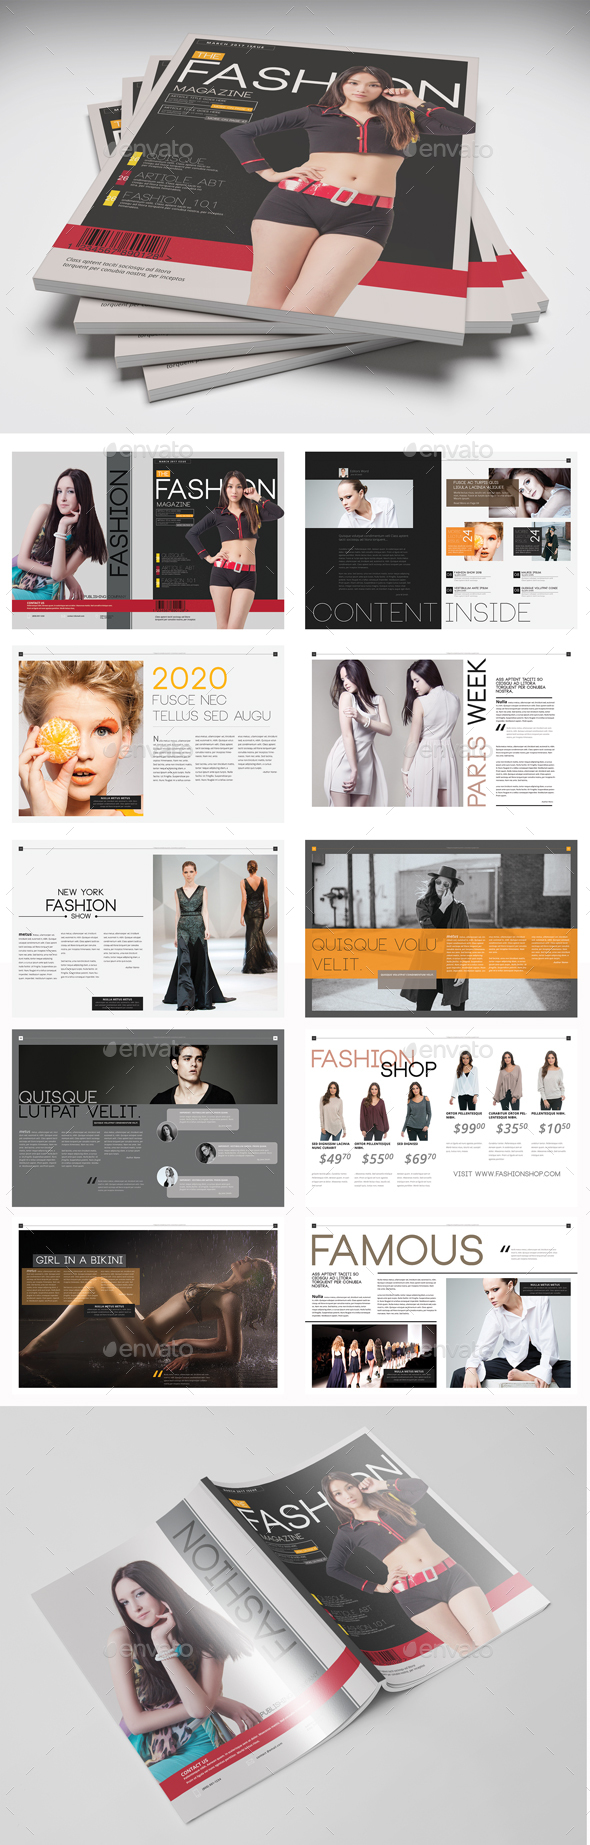 Fashion Magazine Template - PSD